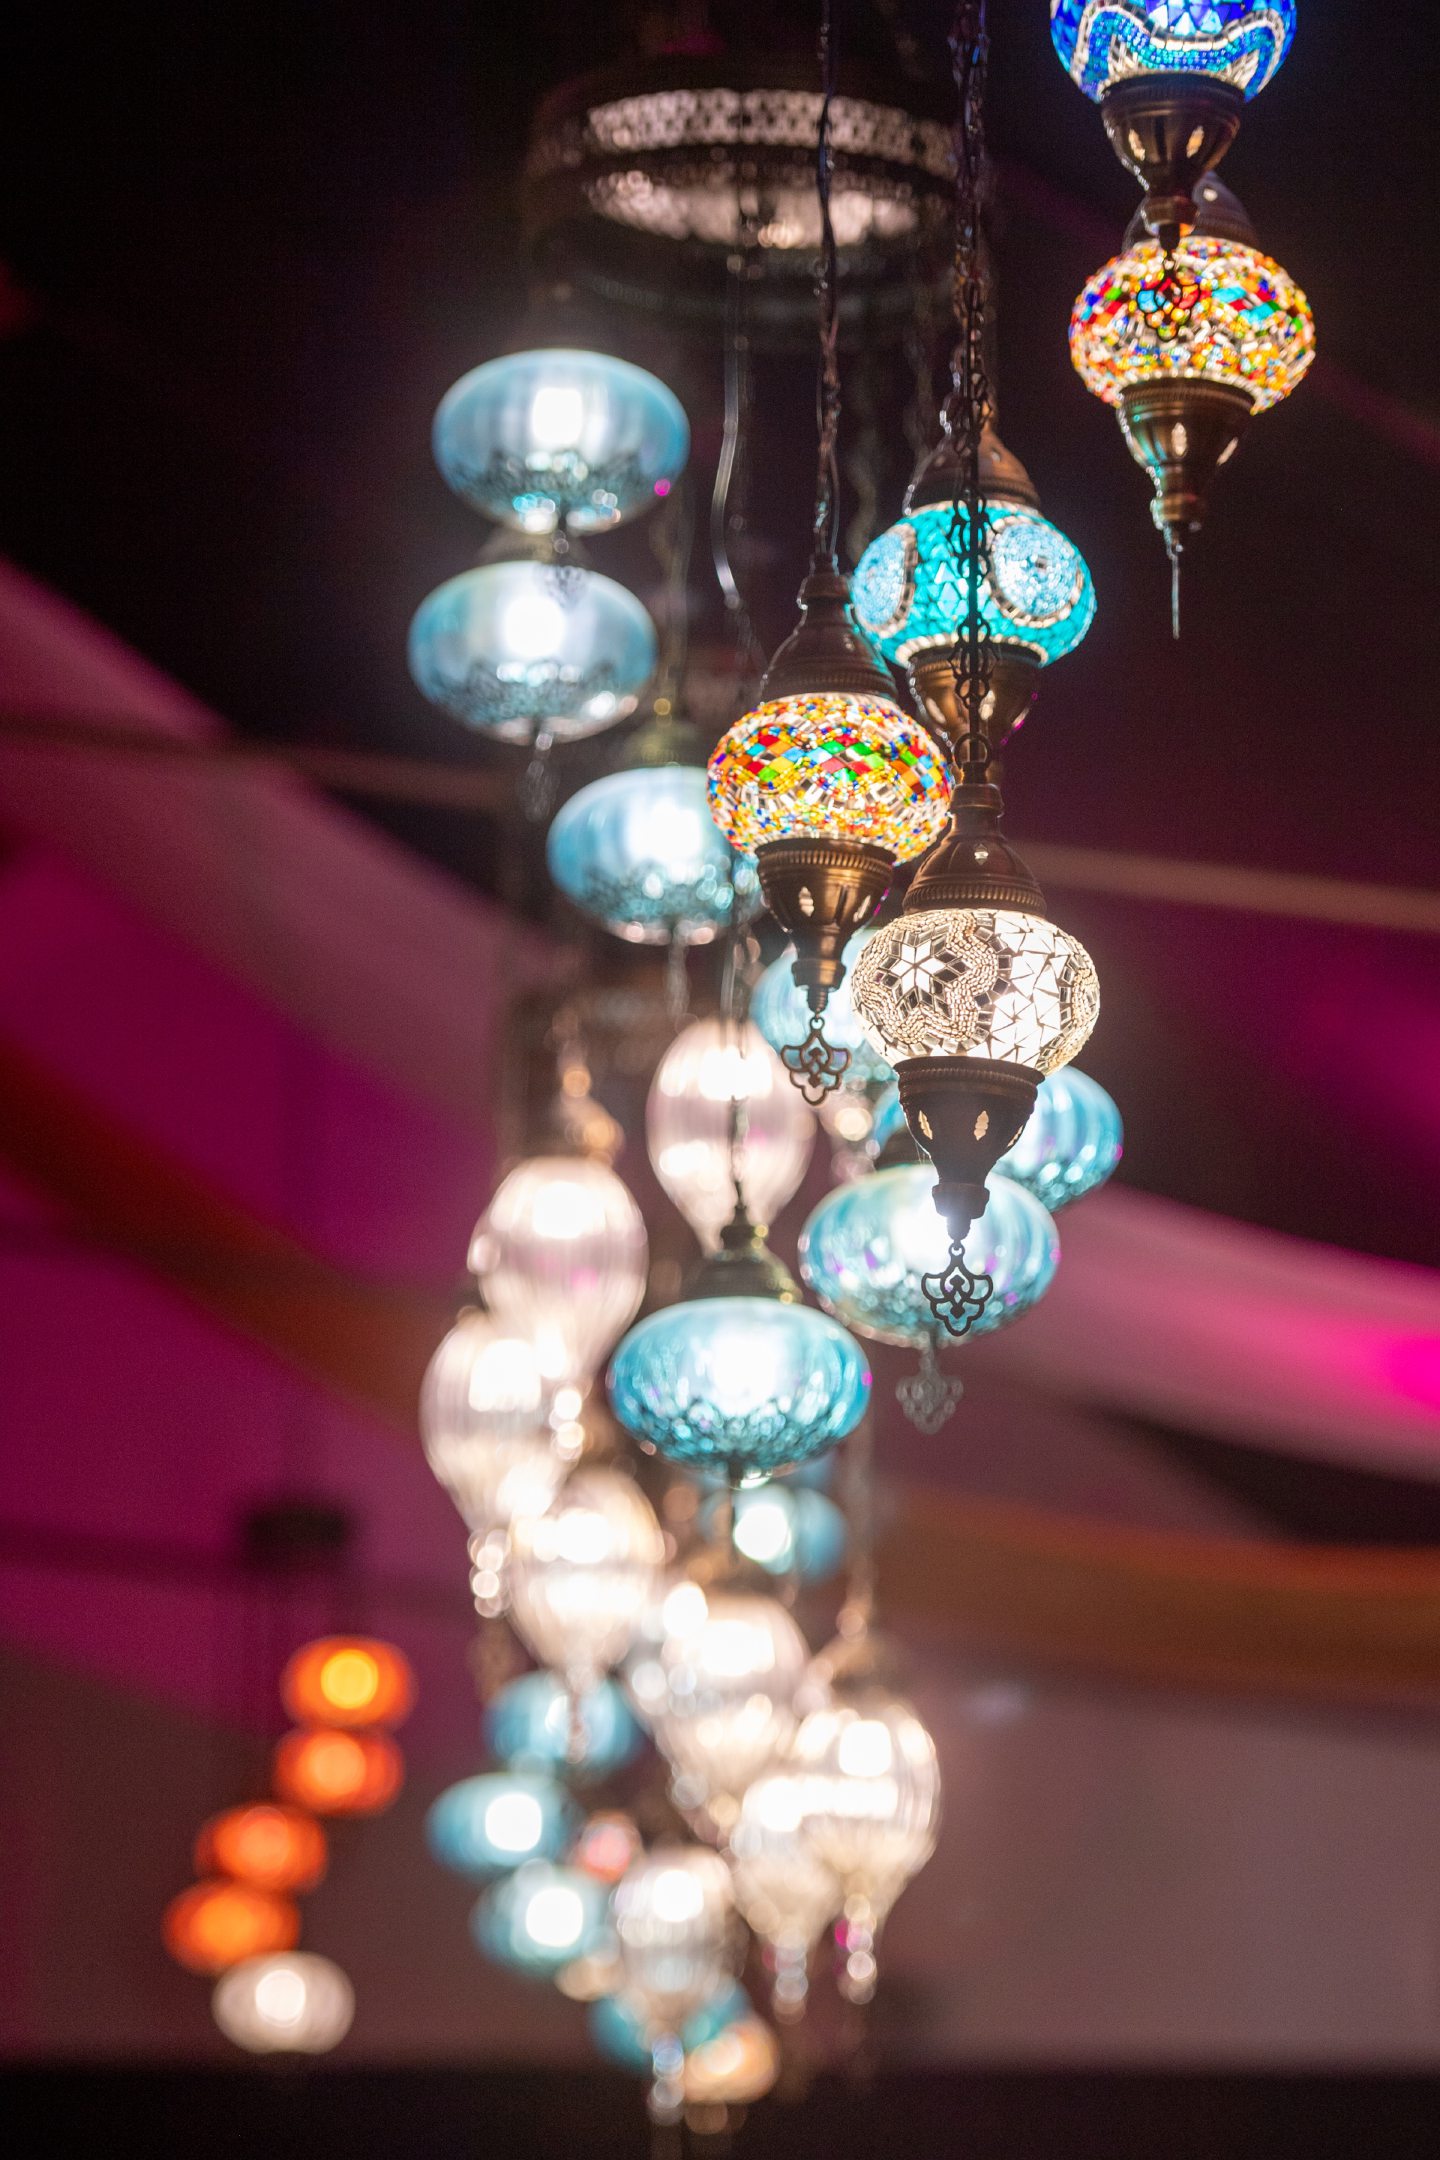 Colourful Turkish chandeliers inside restaurant.